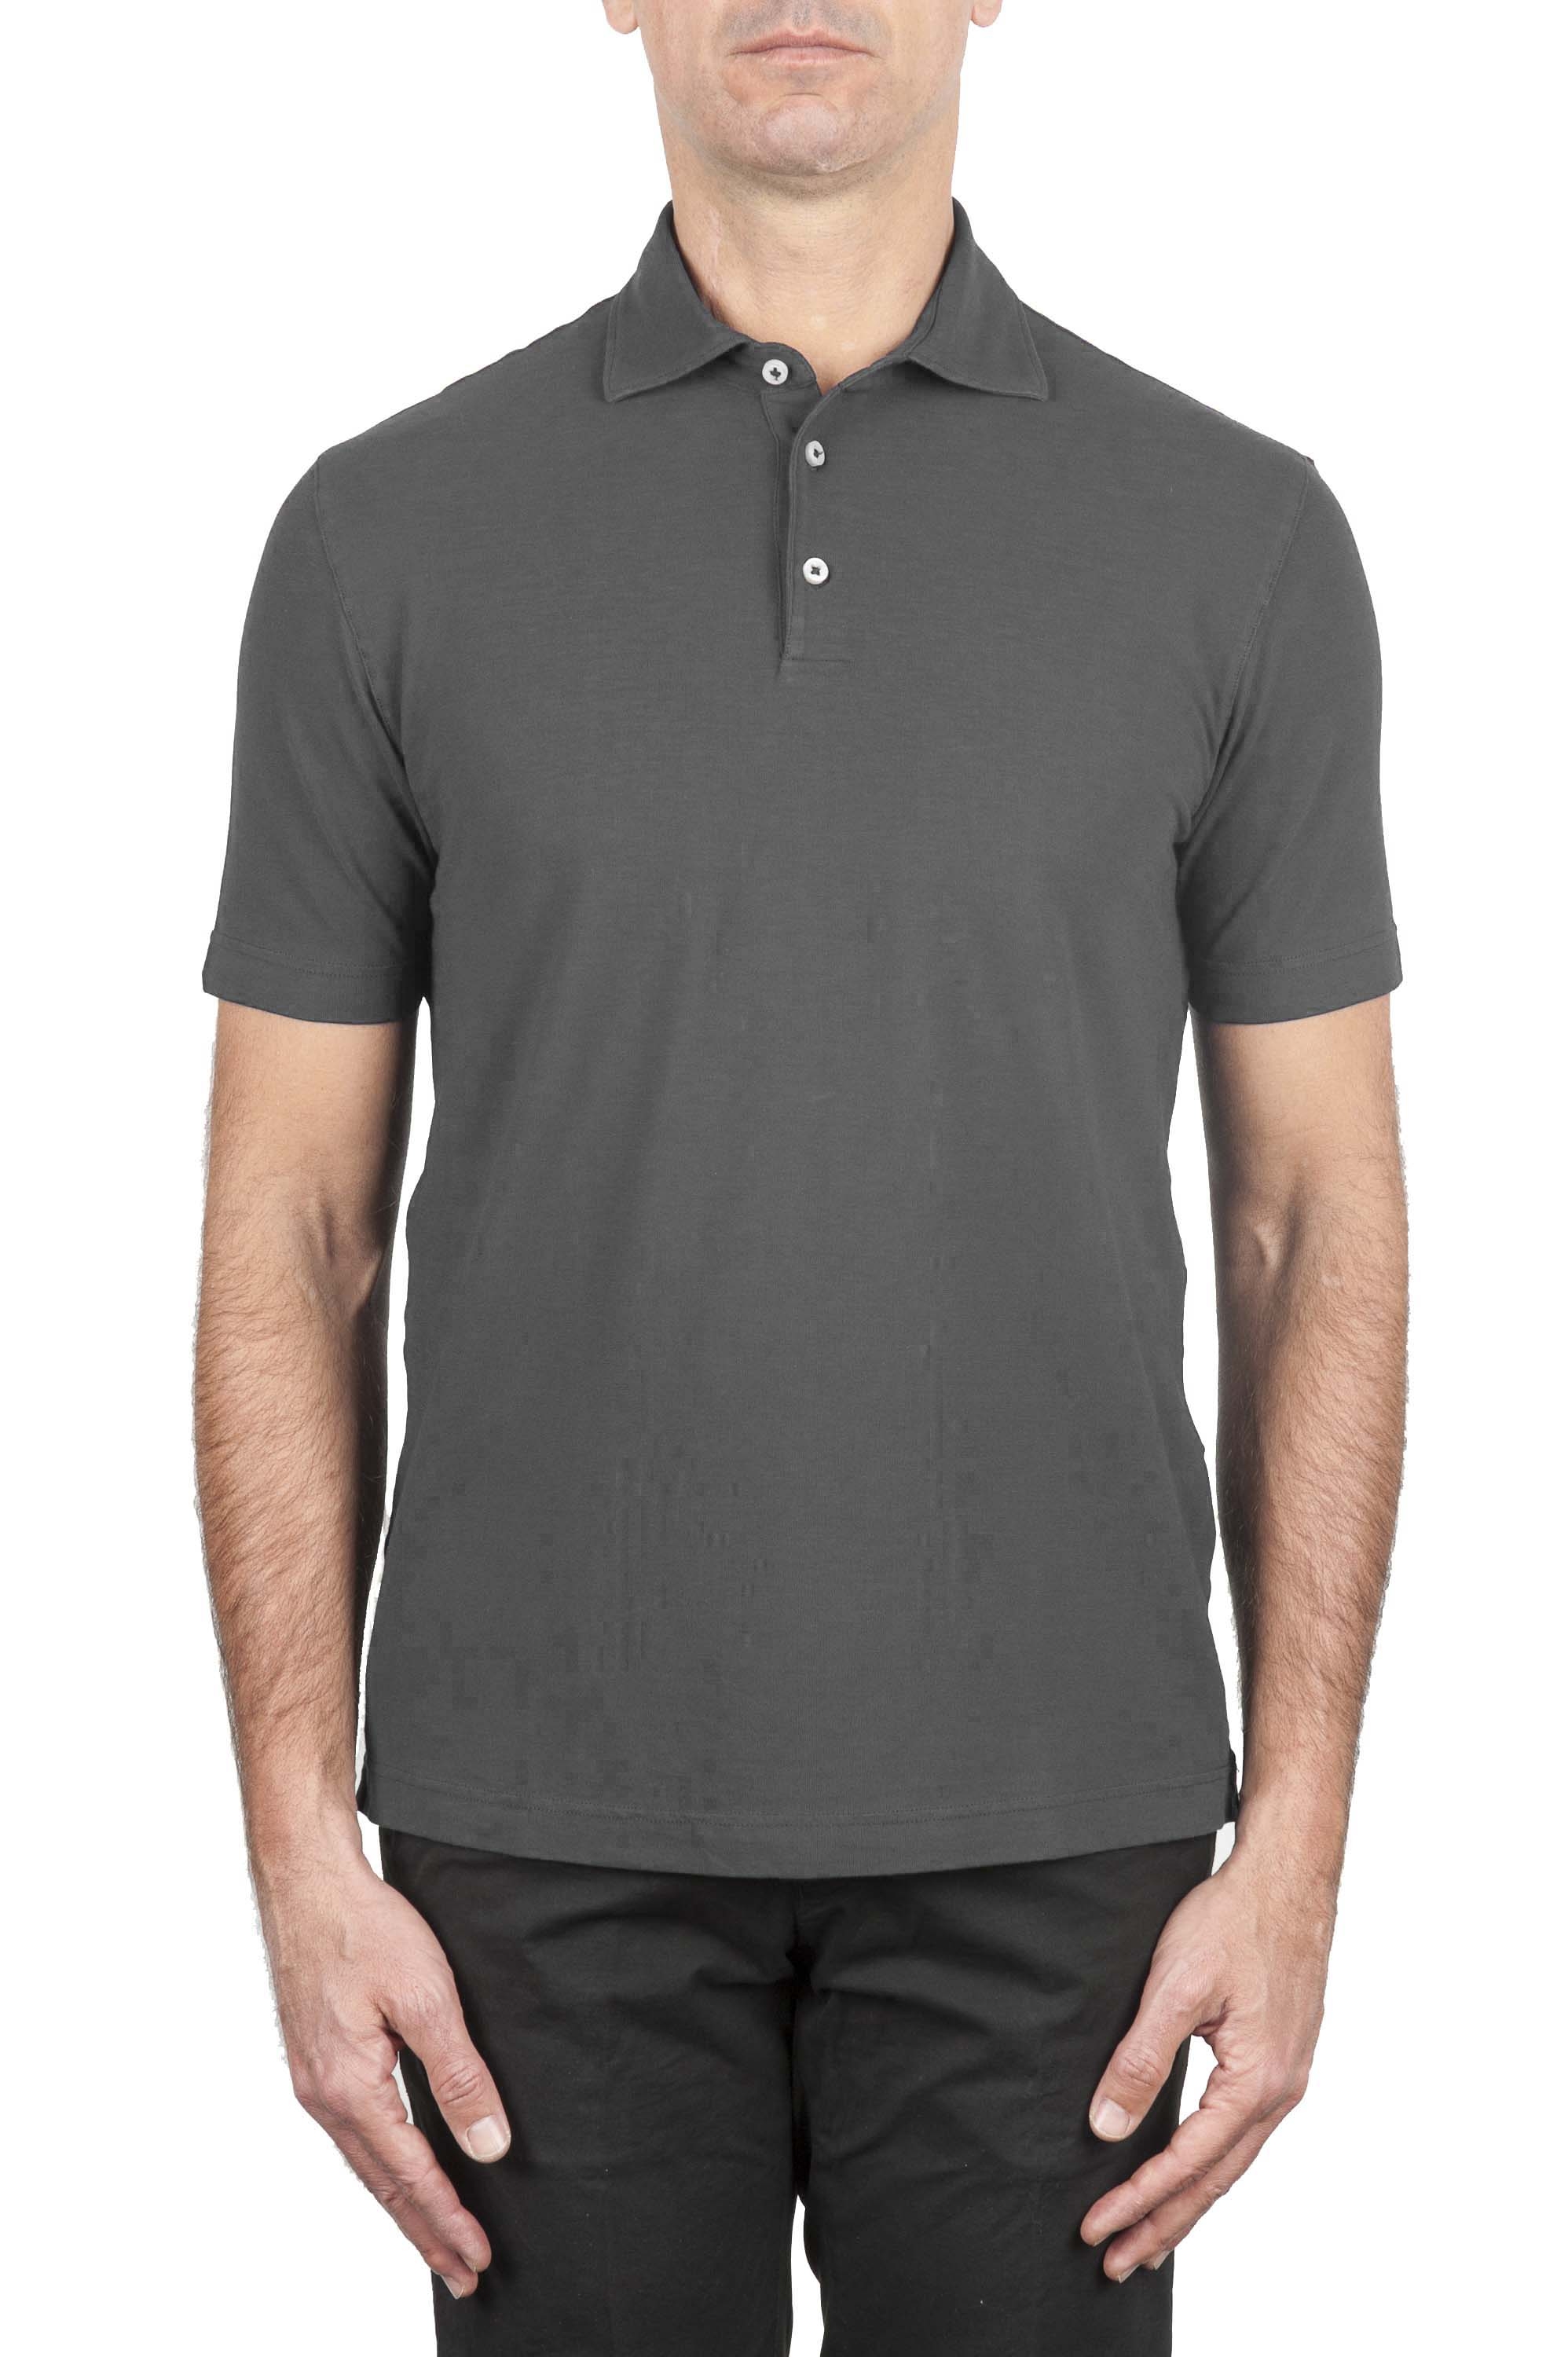 SBU 01691 Classic short sleeve grey cotton crepe polo shirt 01